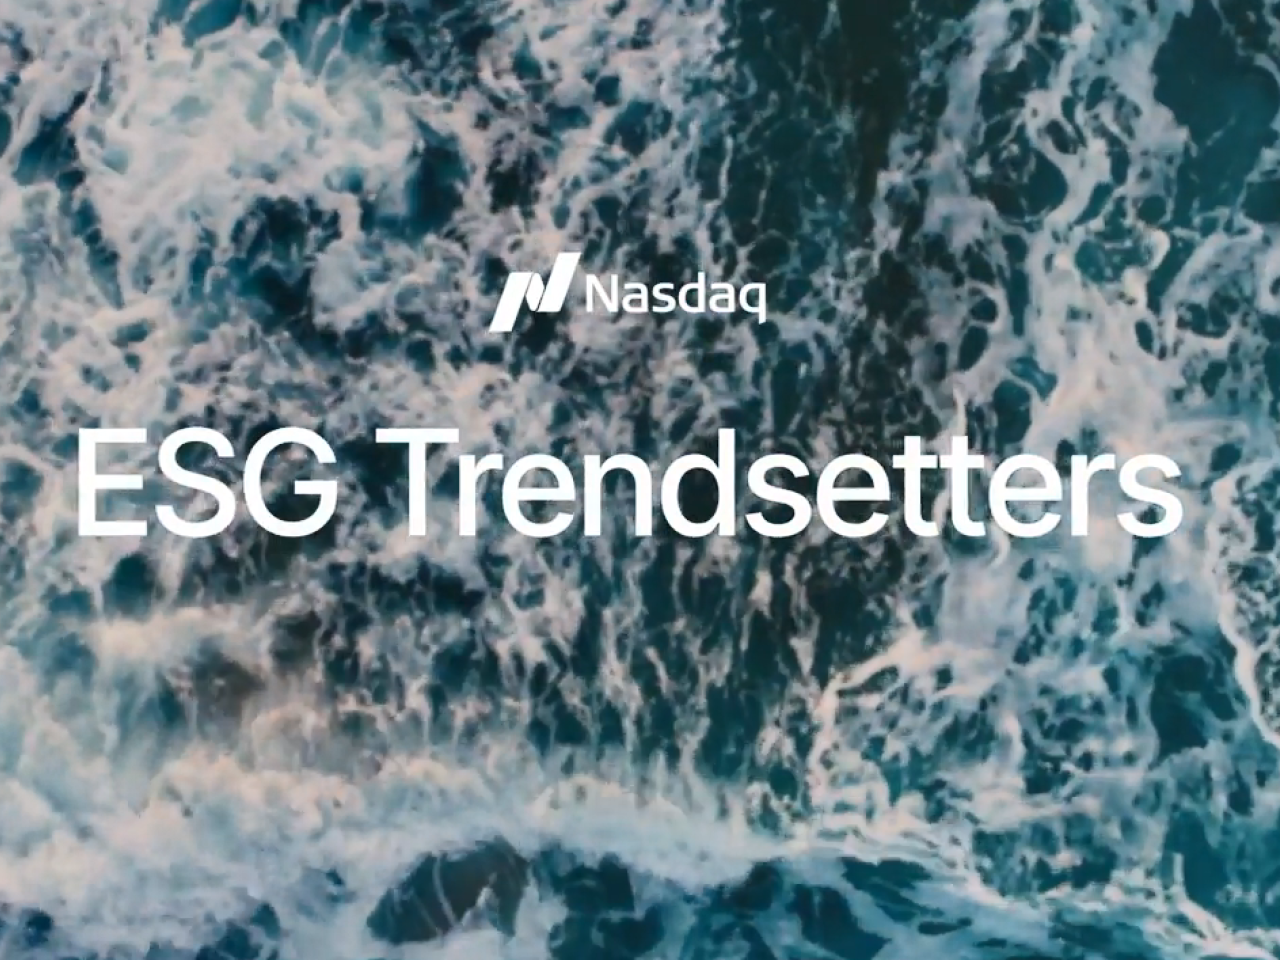 "Nasdaq. ESG Trendsetters" over a background of crashing waves.